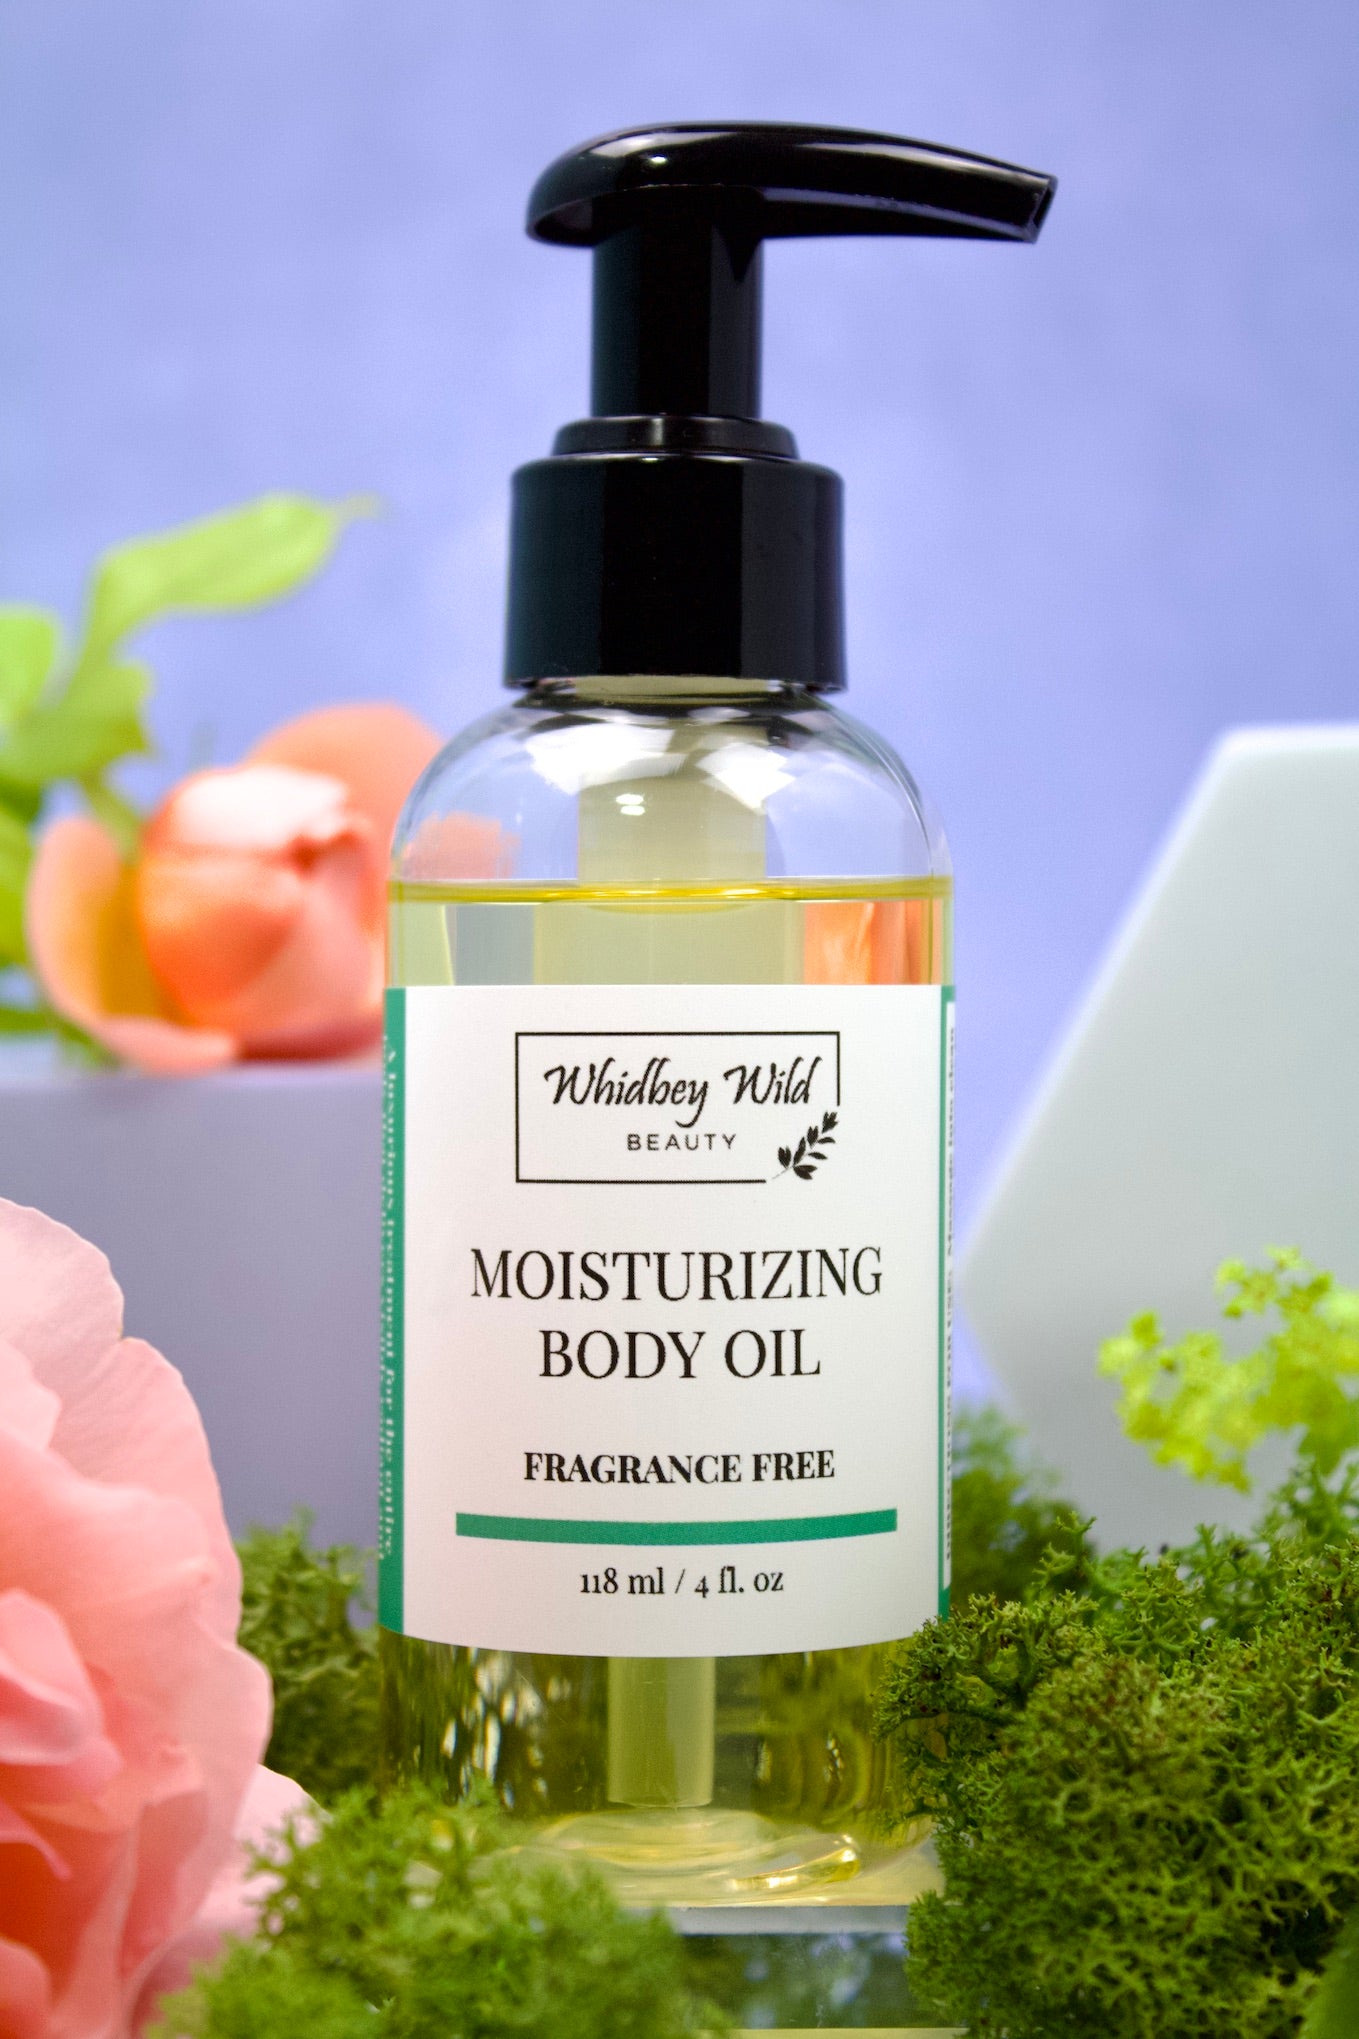 Moisturizing Body Oil